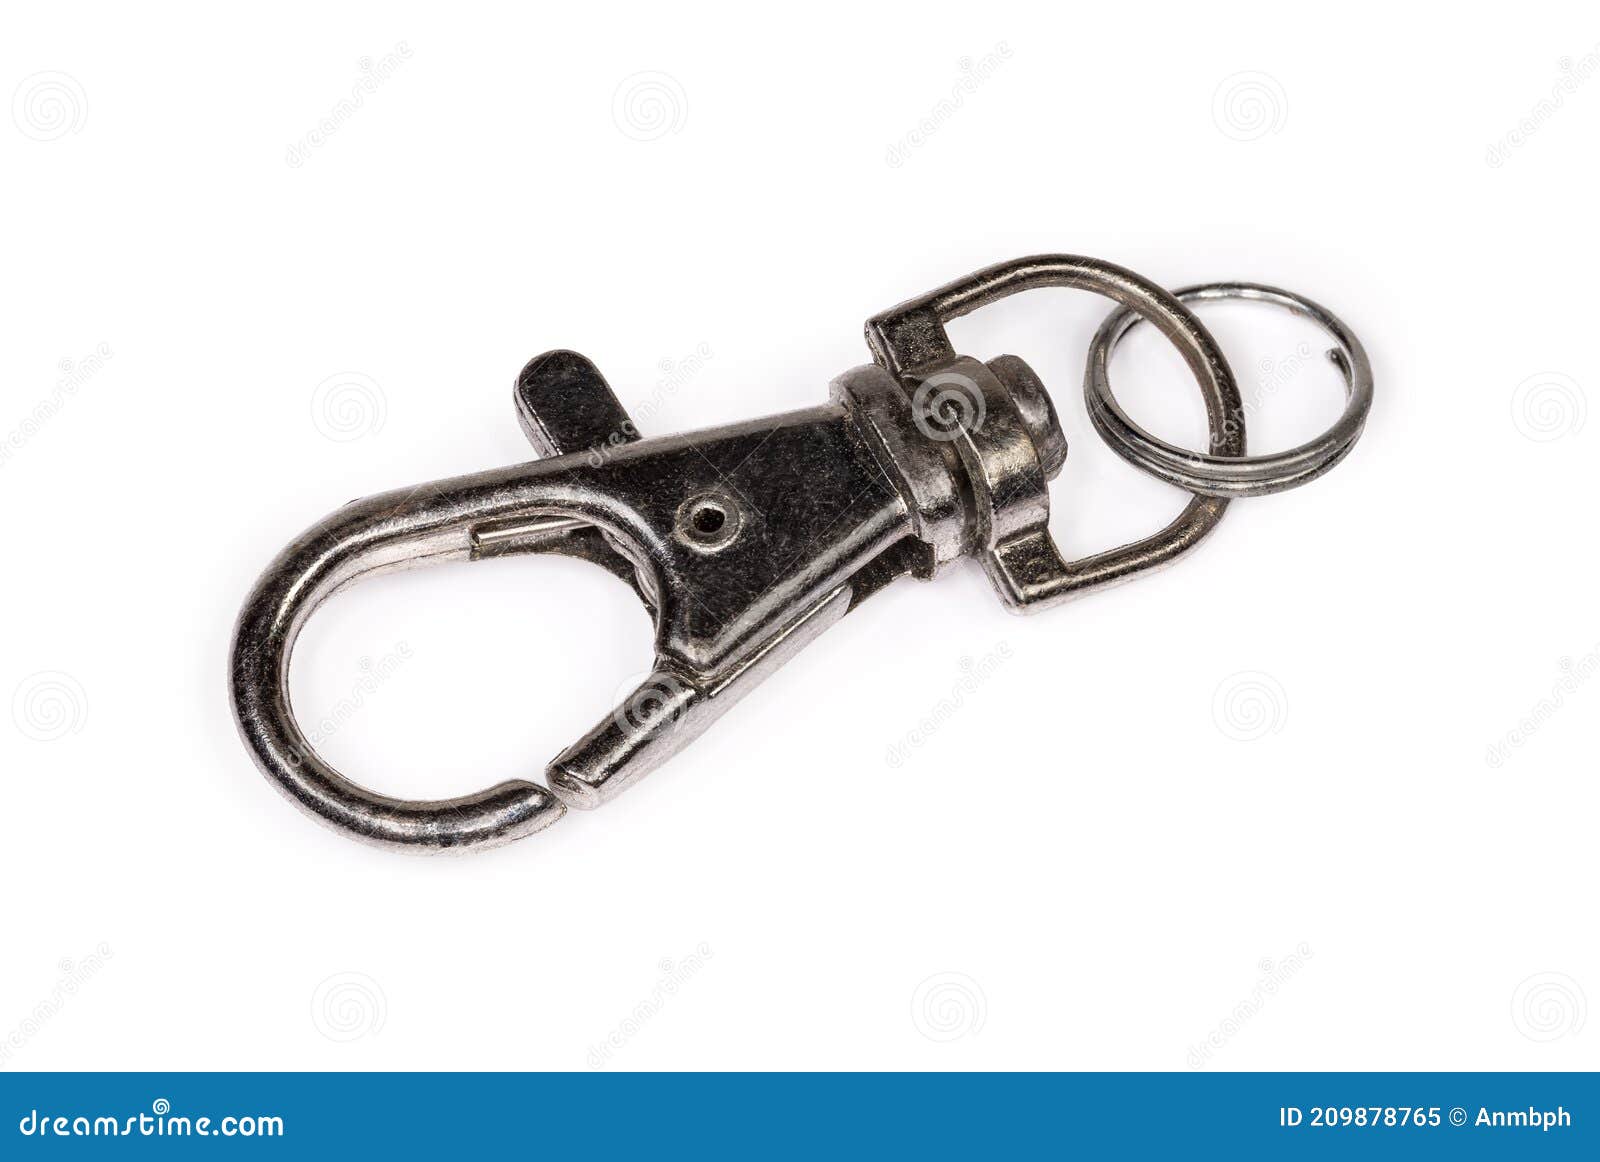 Metal Swivel Eye Snap Hook with Split Ring Close-up Stock Image - Image of  design, trigger: 209878765